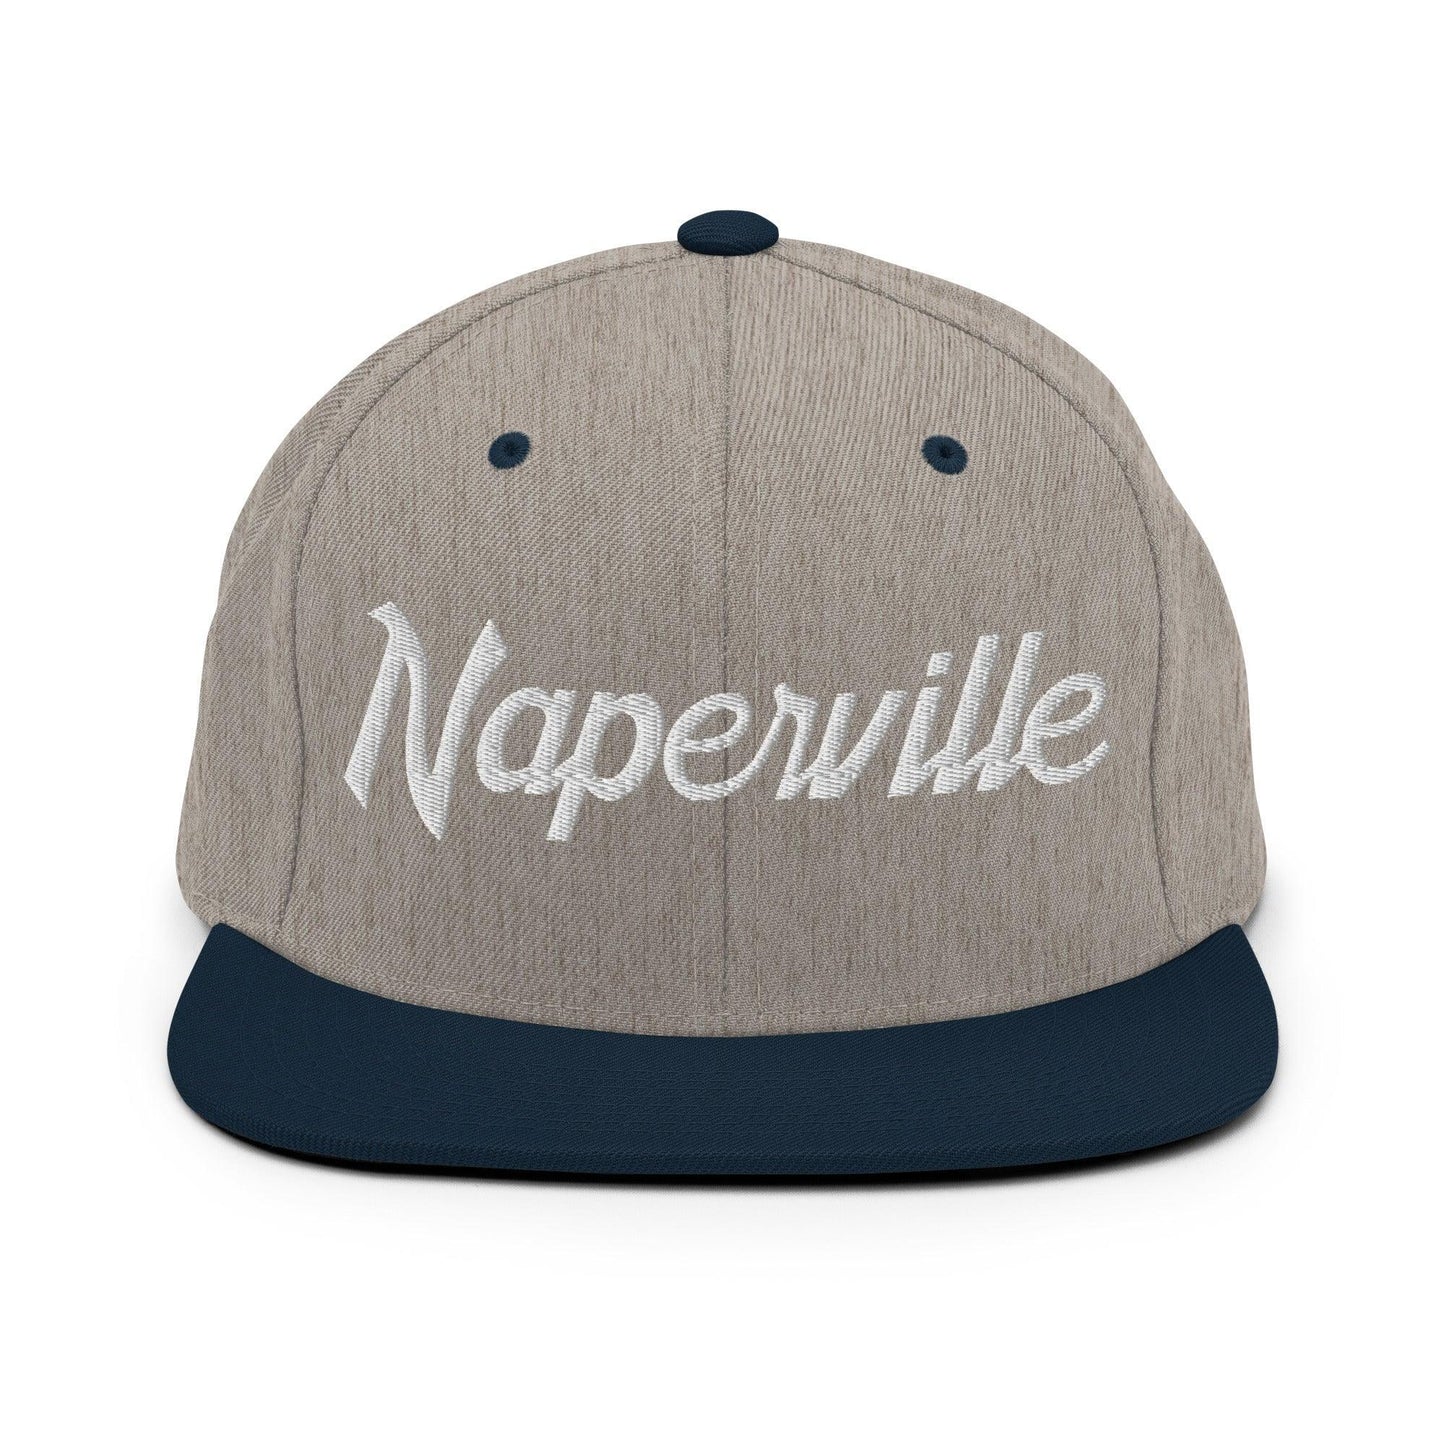 Naperville Script Snapback Hat Heather Grey Navy